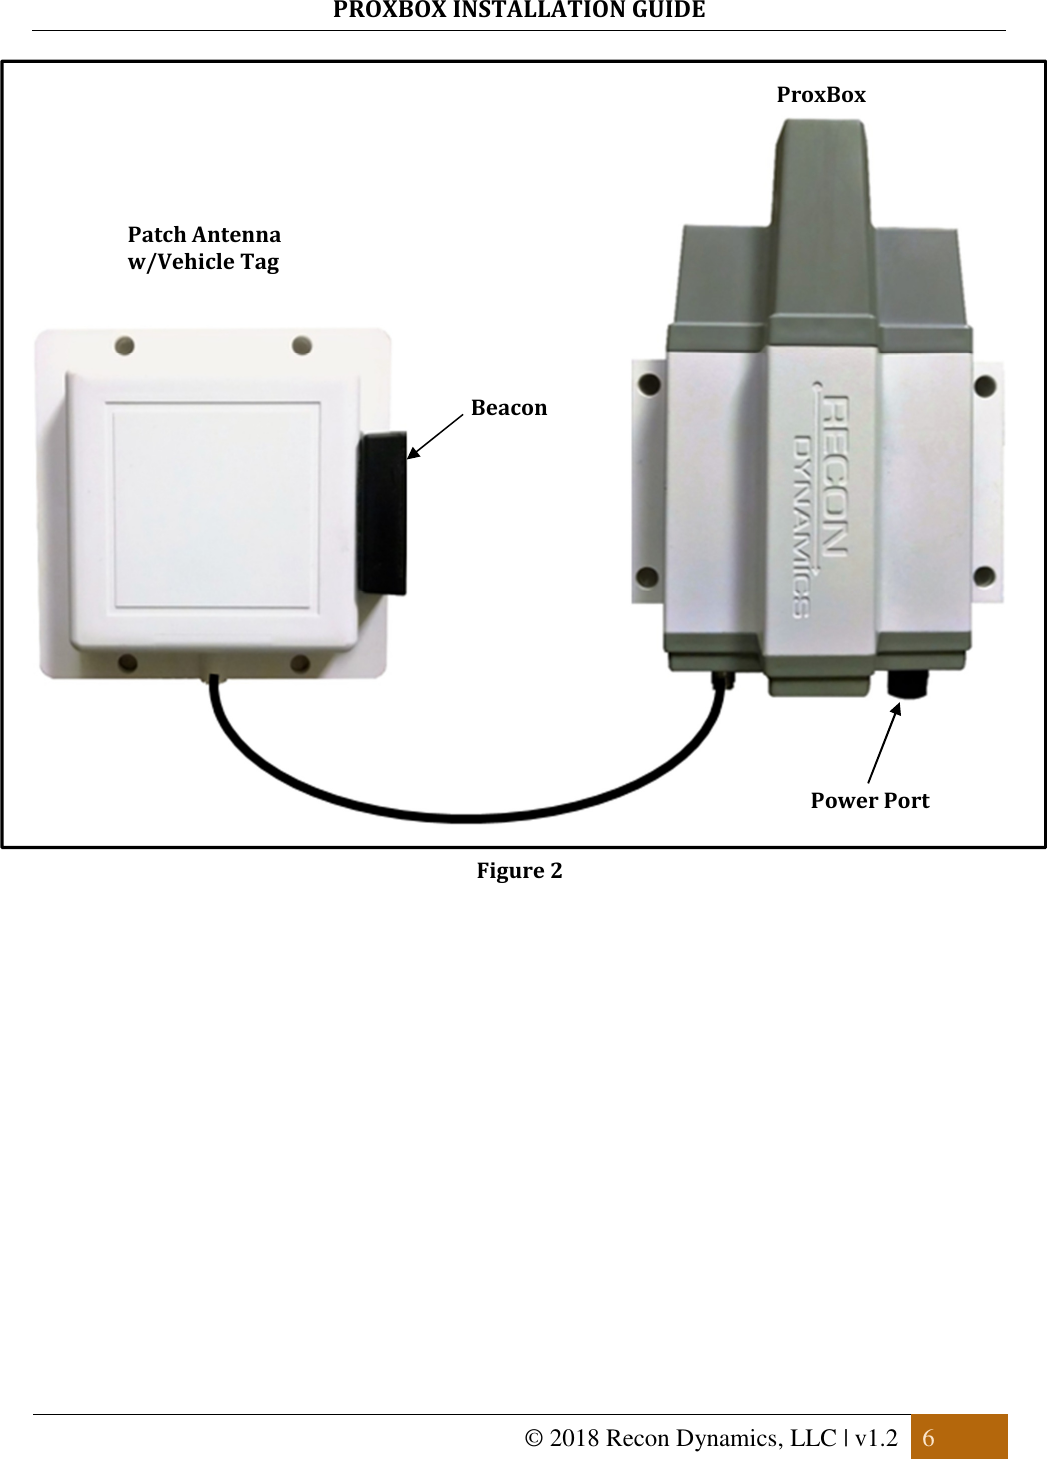 PROXBOX INSTALLATION GUIDE   © 2018 Recon Dynamics, LLC | v1.2  6    Figure 2ProxBoxPatch Antenna w/Vehicle Tag Power PortBeacon 